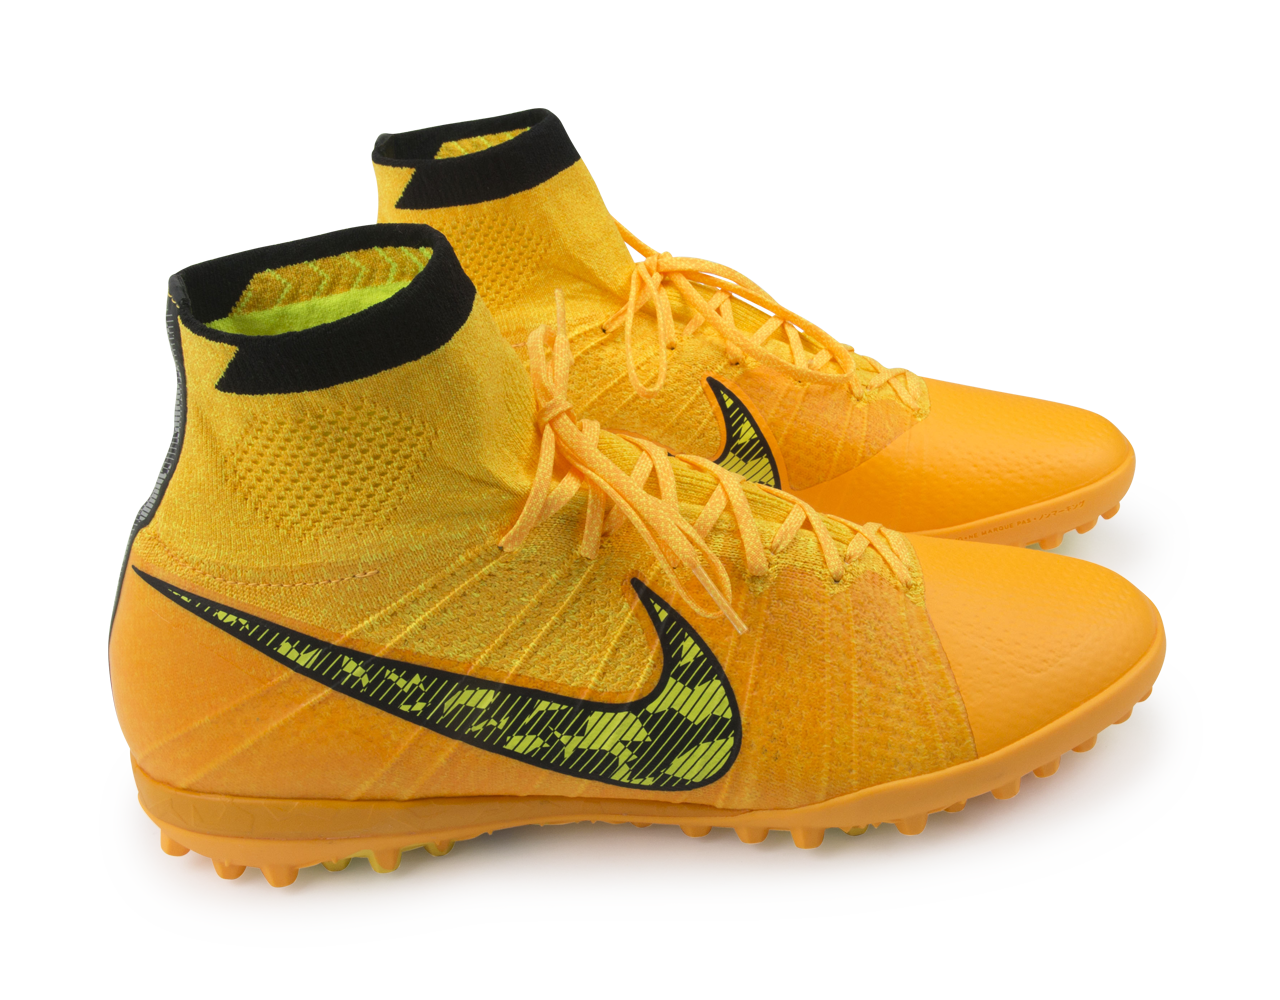 Nike Men's Elastico Superfly Turf Soccer Shoes Laser Orange/Black/Tour Yellow